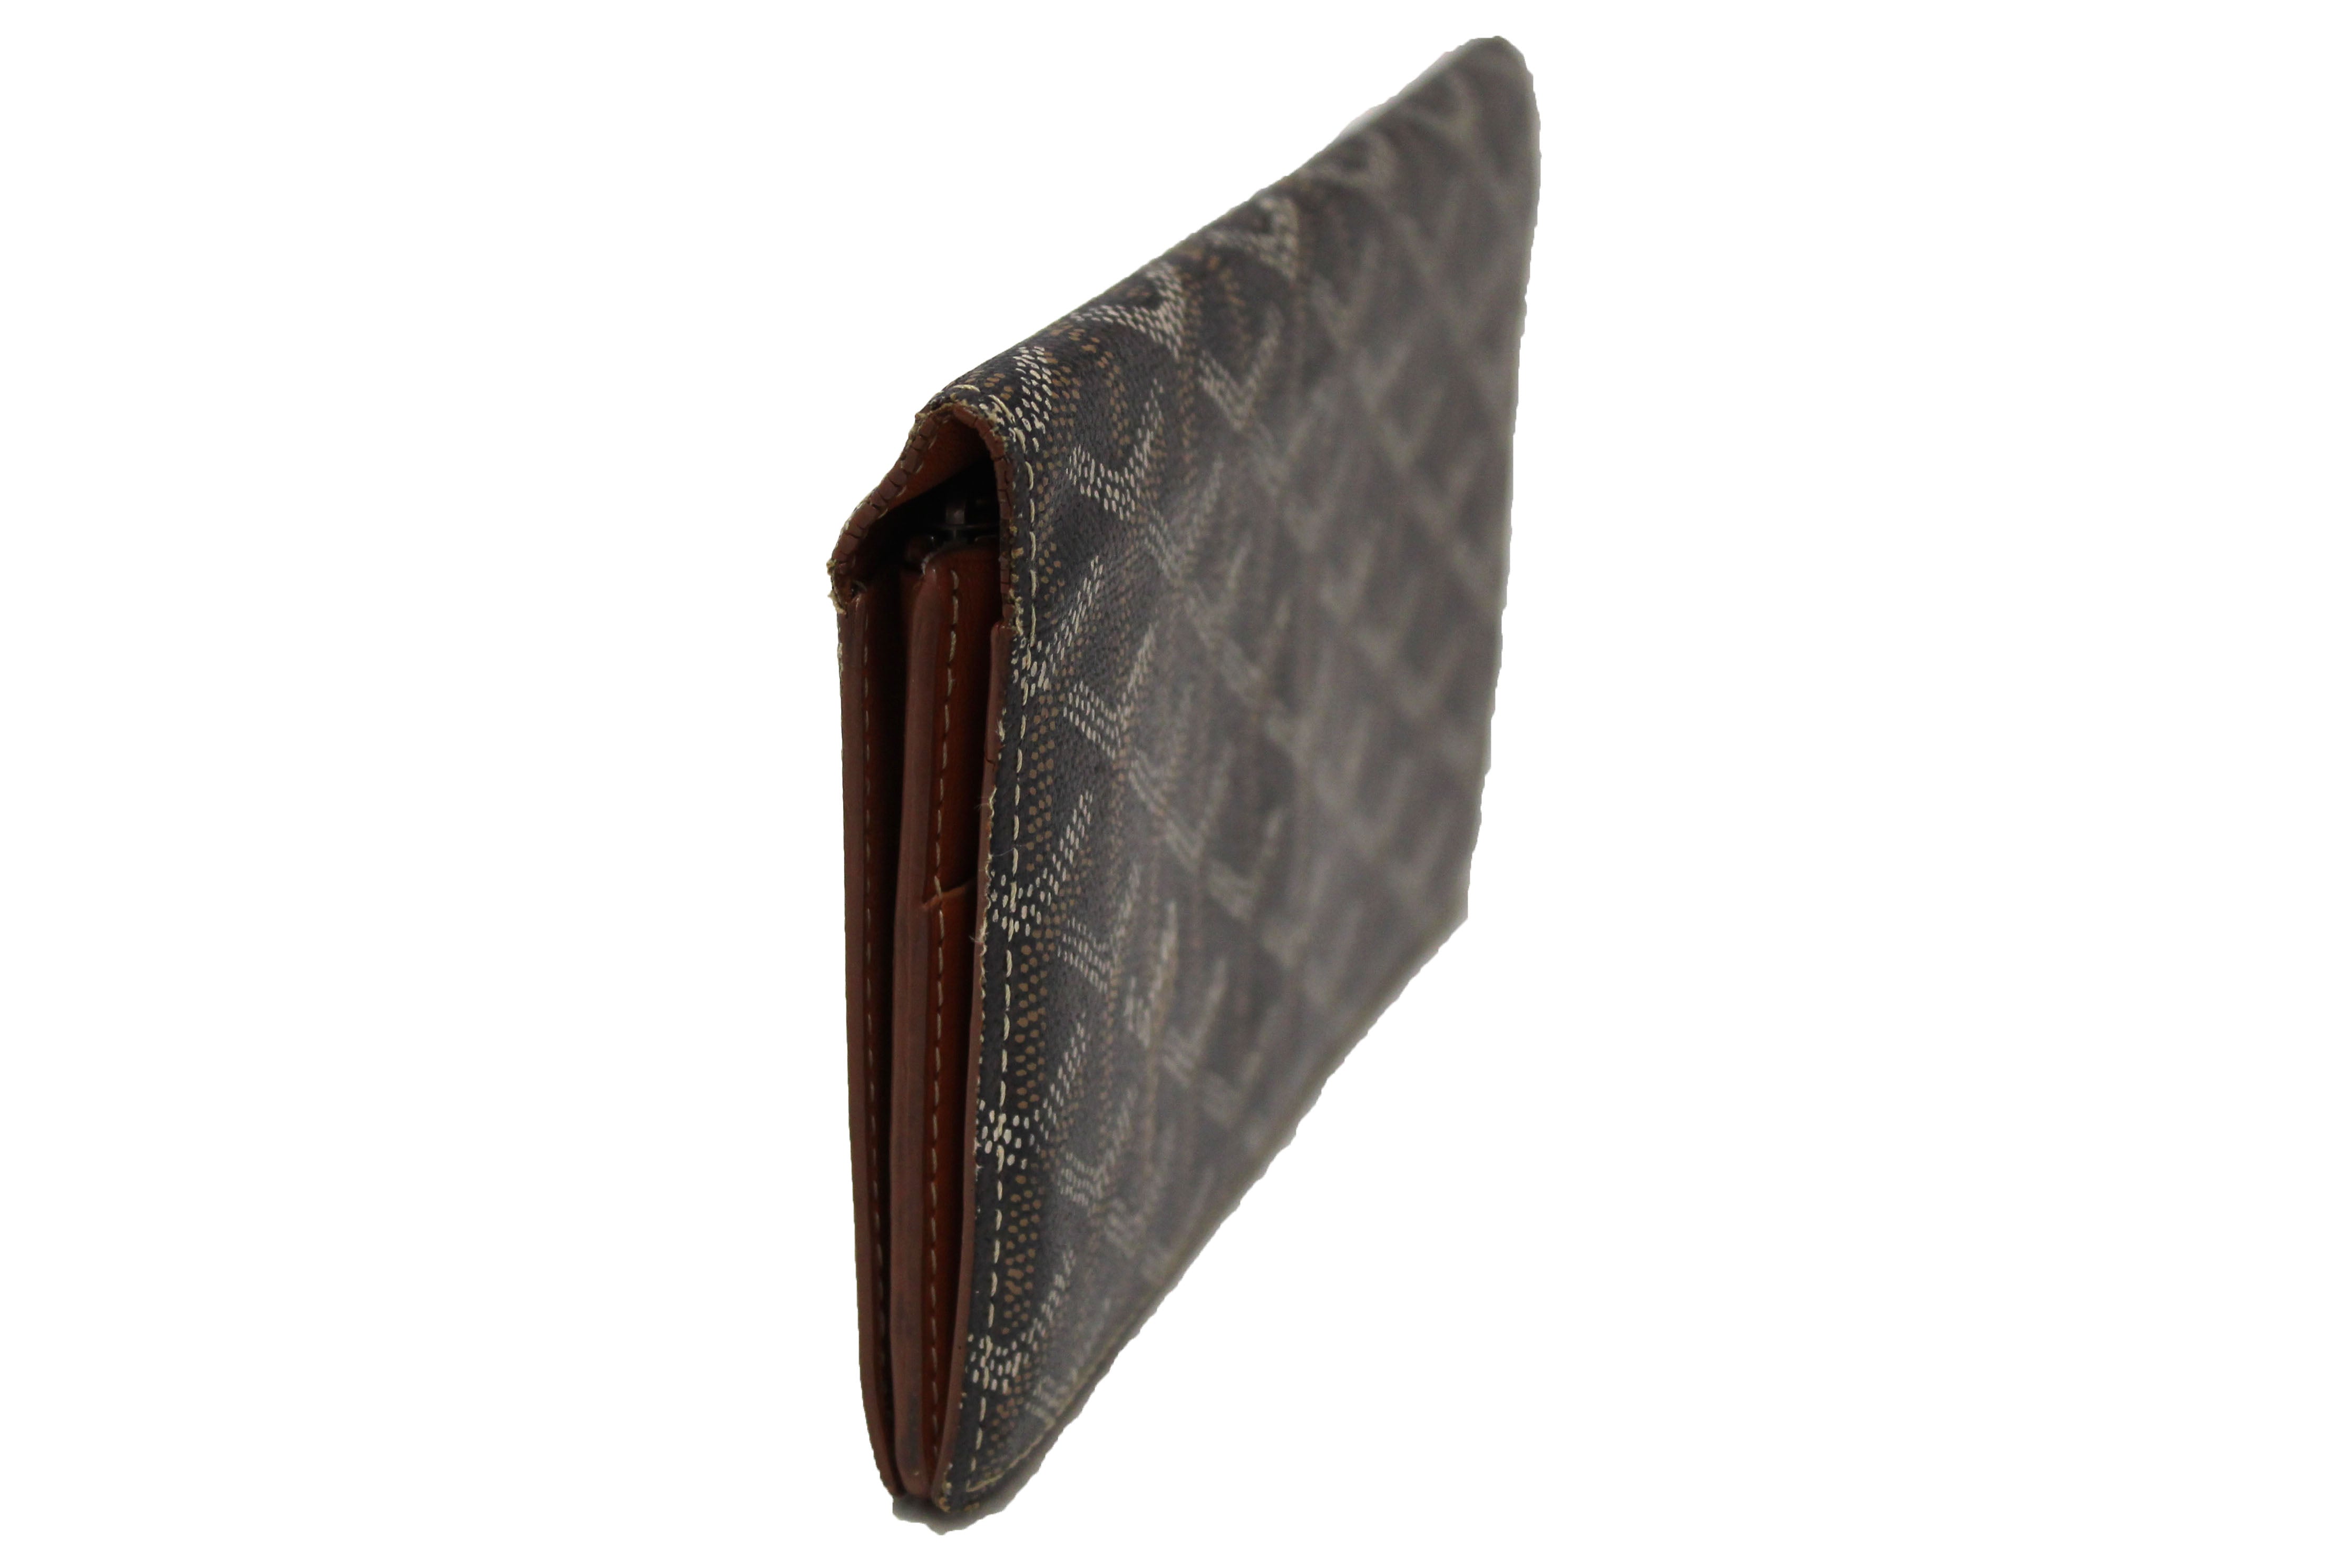 Black Goyard Goyardine Richelieu Wallet – Designer Revival